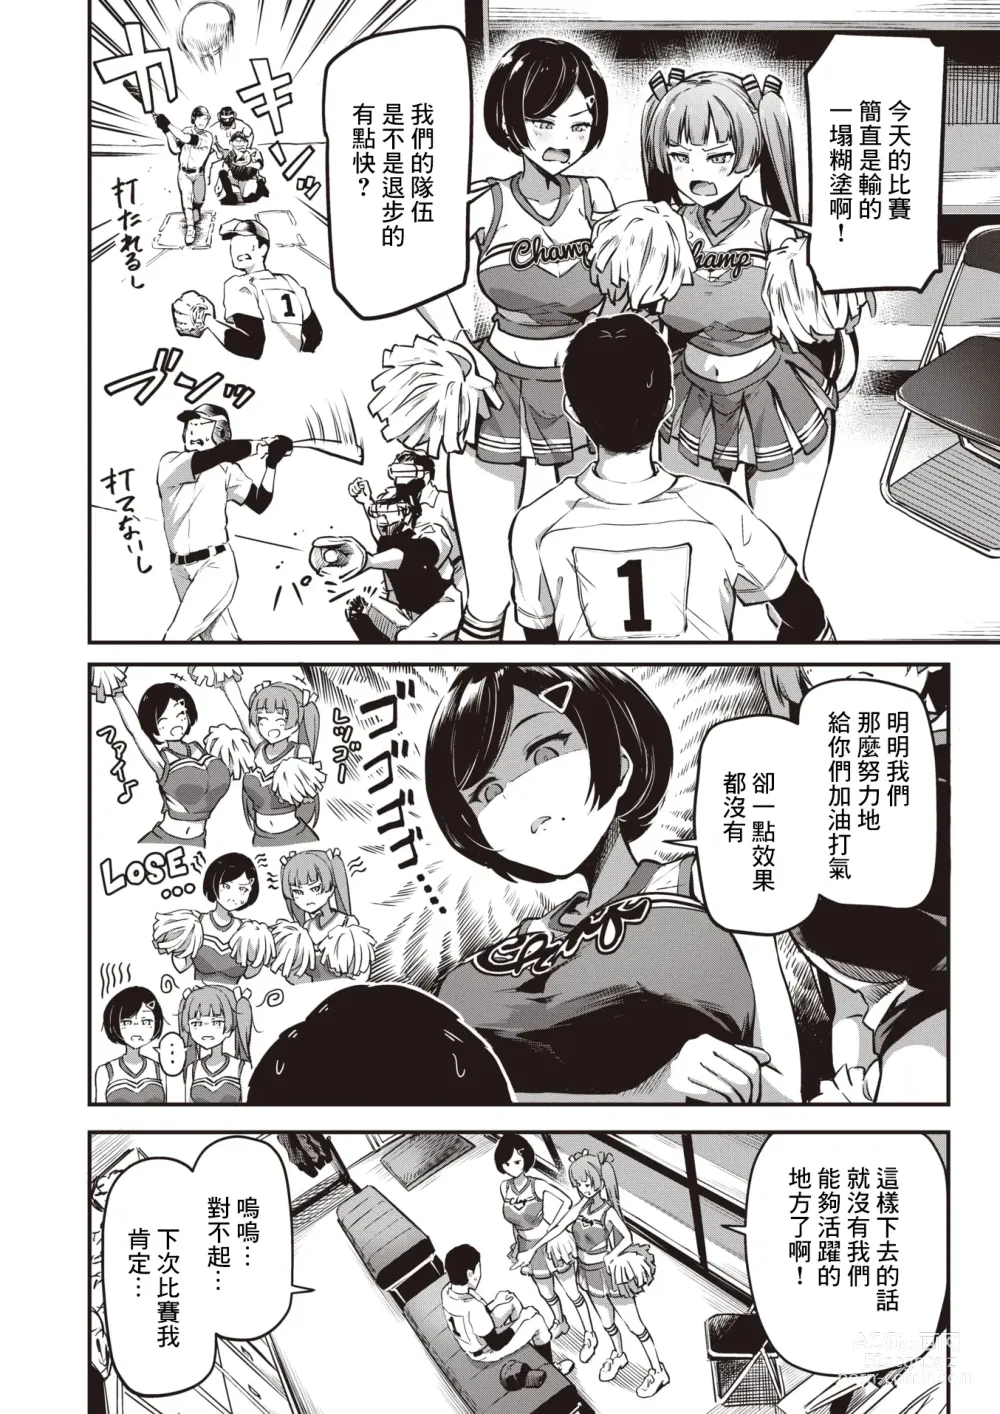 Page 2 of manga Furuitate Captain!